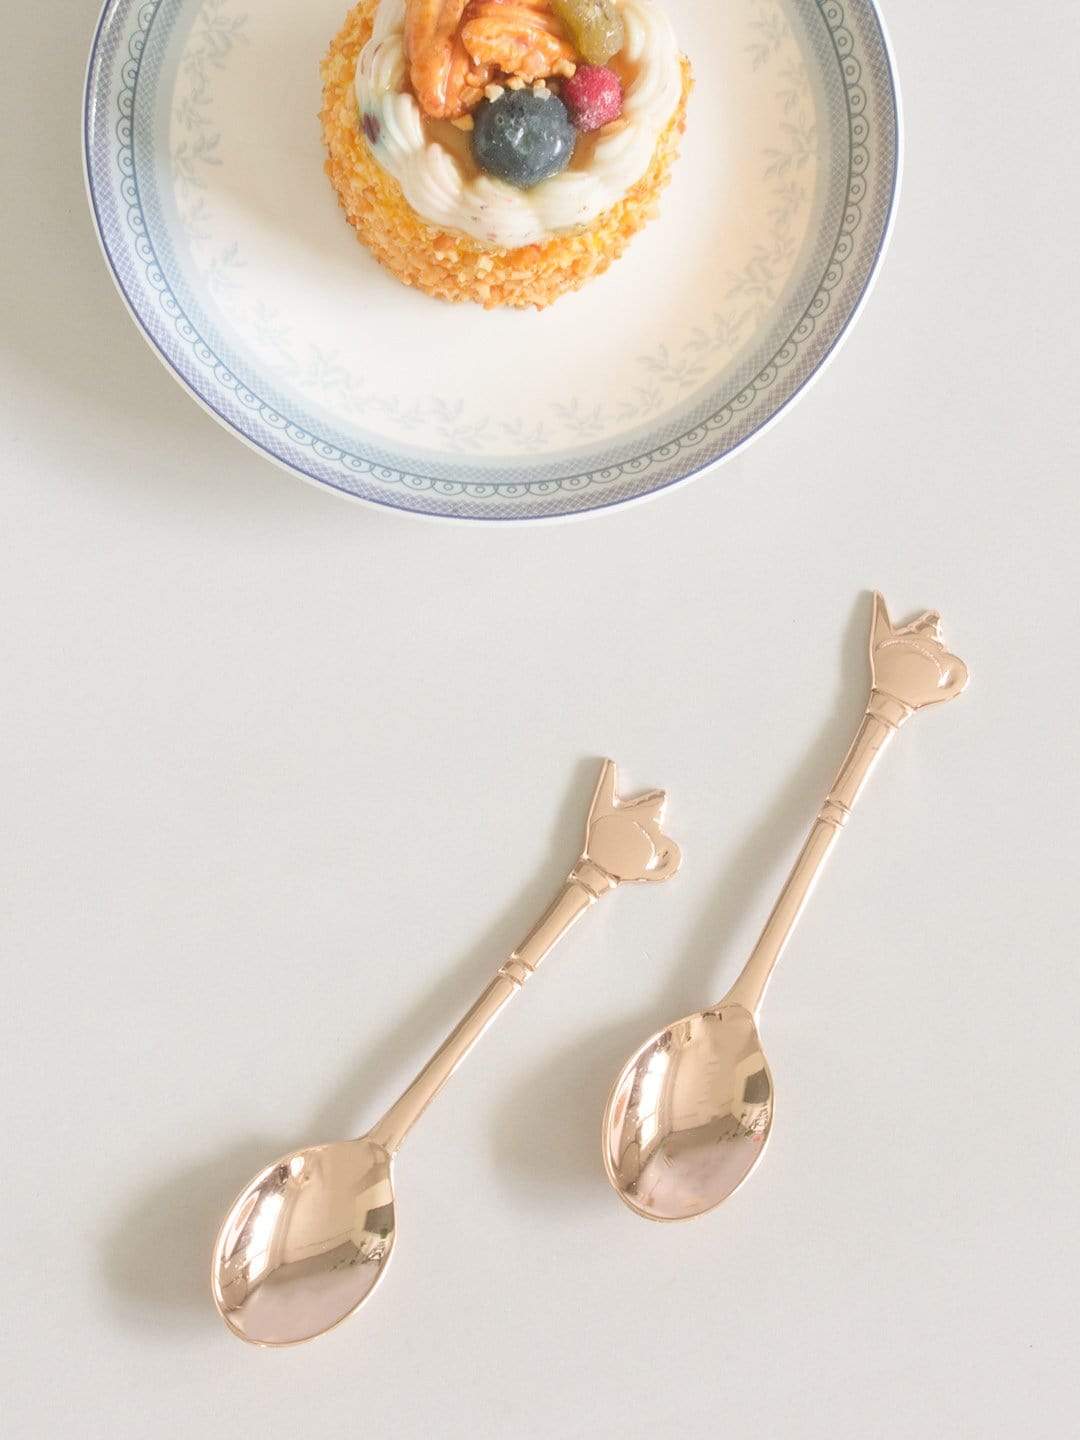 Kettle Handle Dessert Spoons- Set Of 6